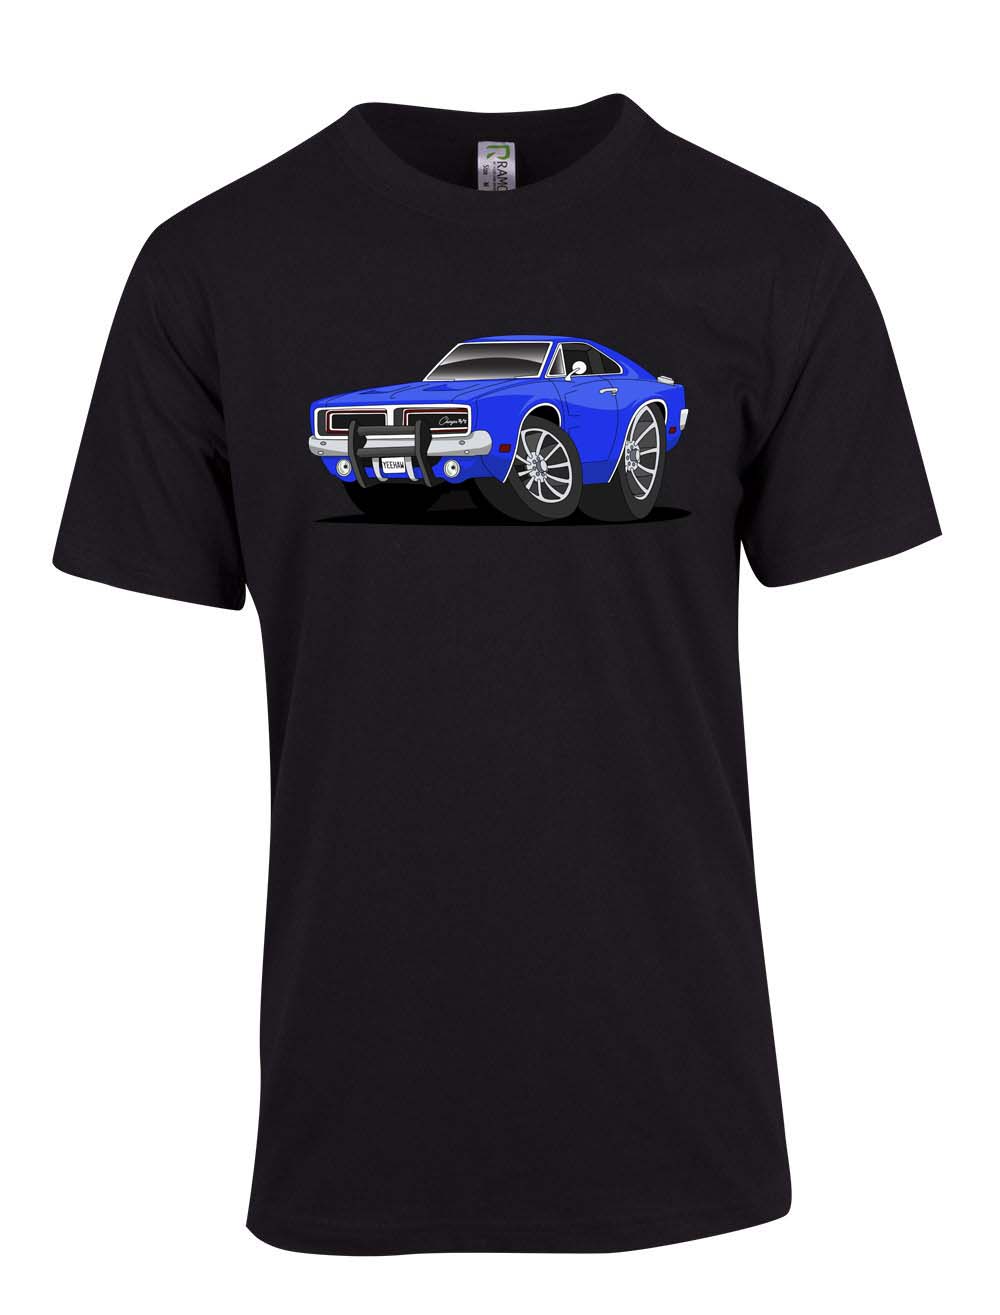 Blue Dodge Charger Logo Printed T-Shirt freeshipping - garageartaustralia